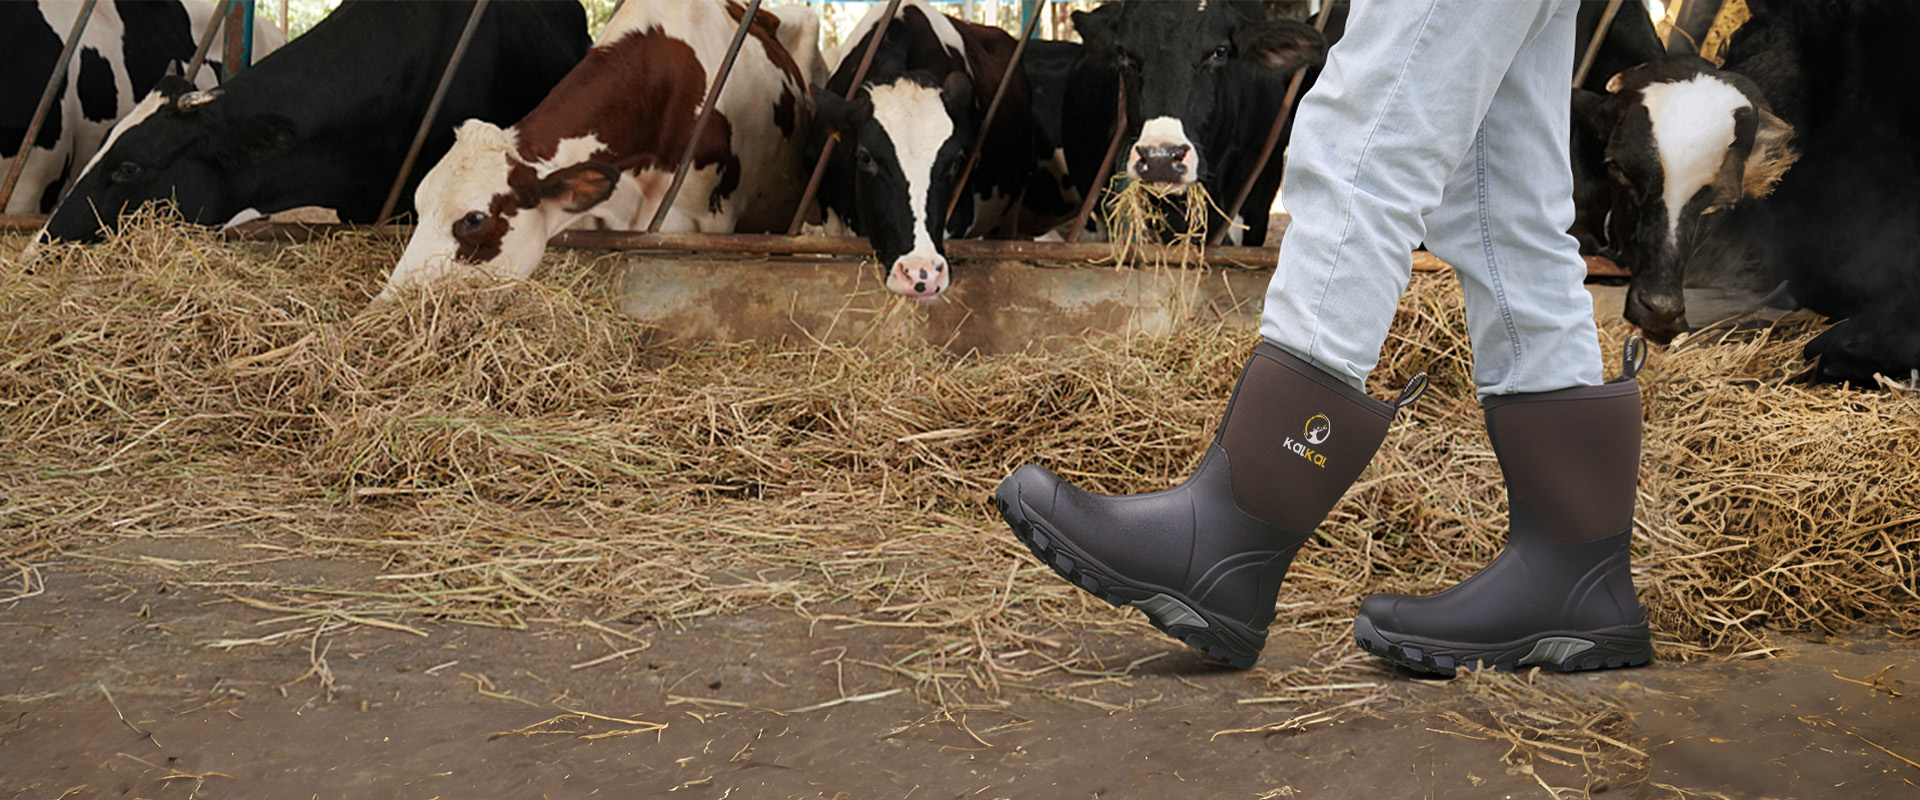 kalkal rubber farm boots